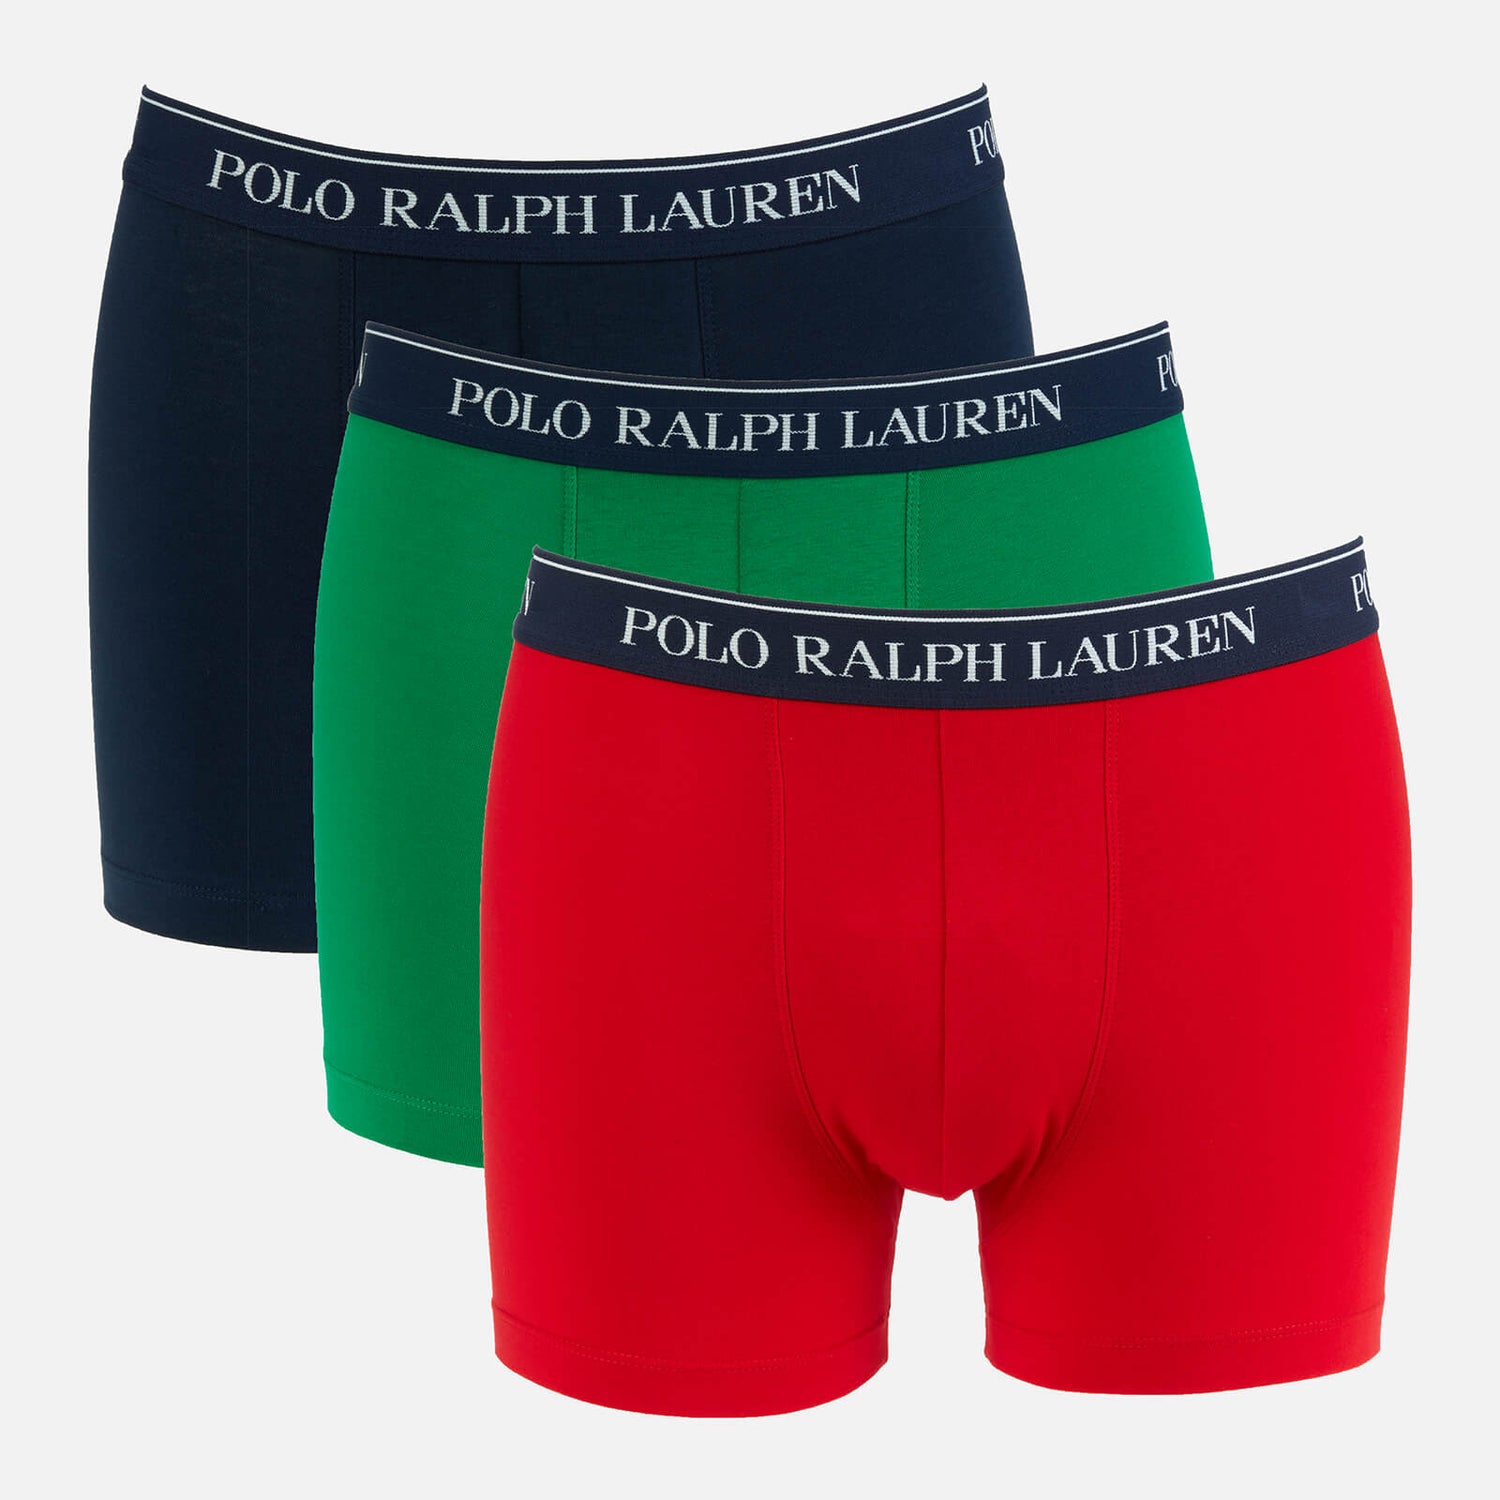 Polo Ralph Lauren Men's 3-Pack Trunk Boxer Shorts - Navy/Red/Green